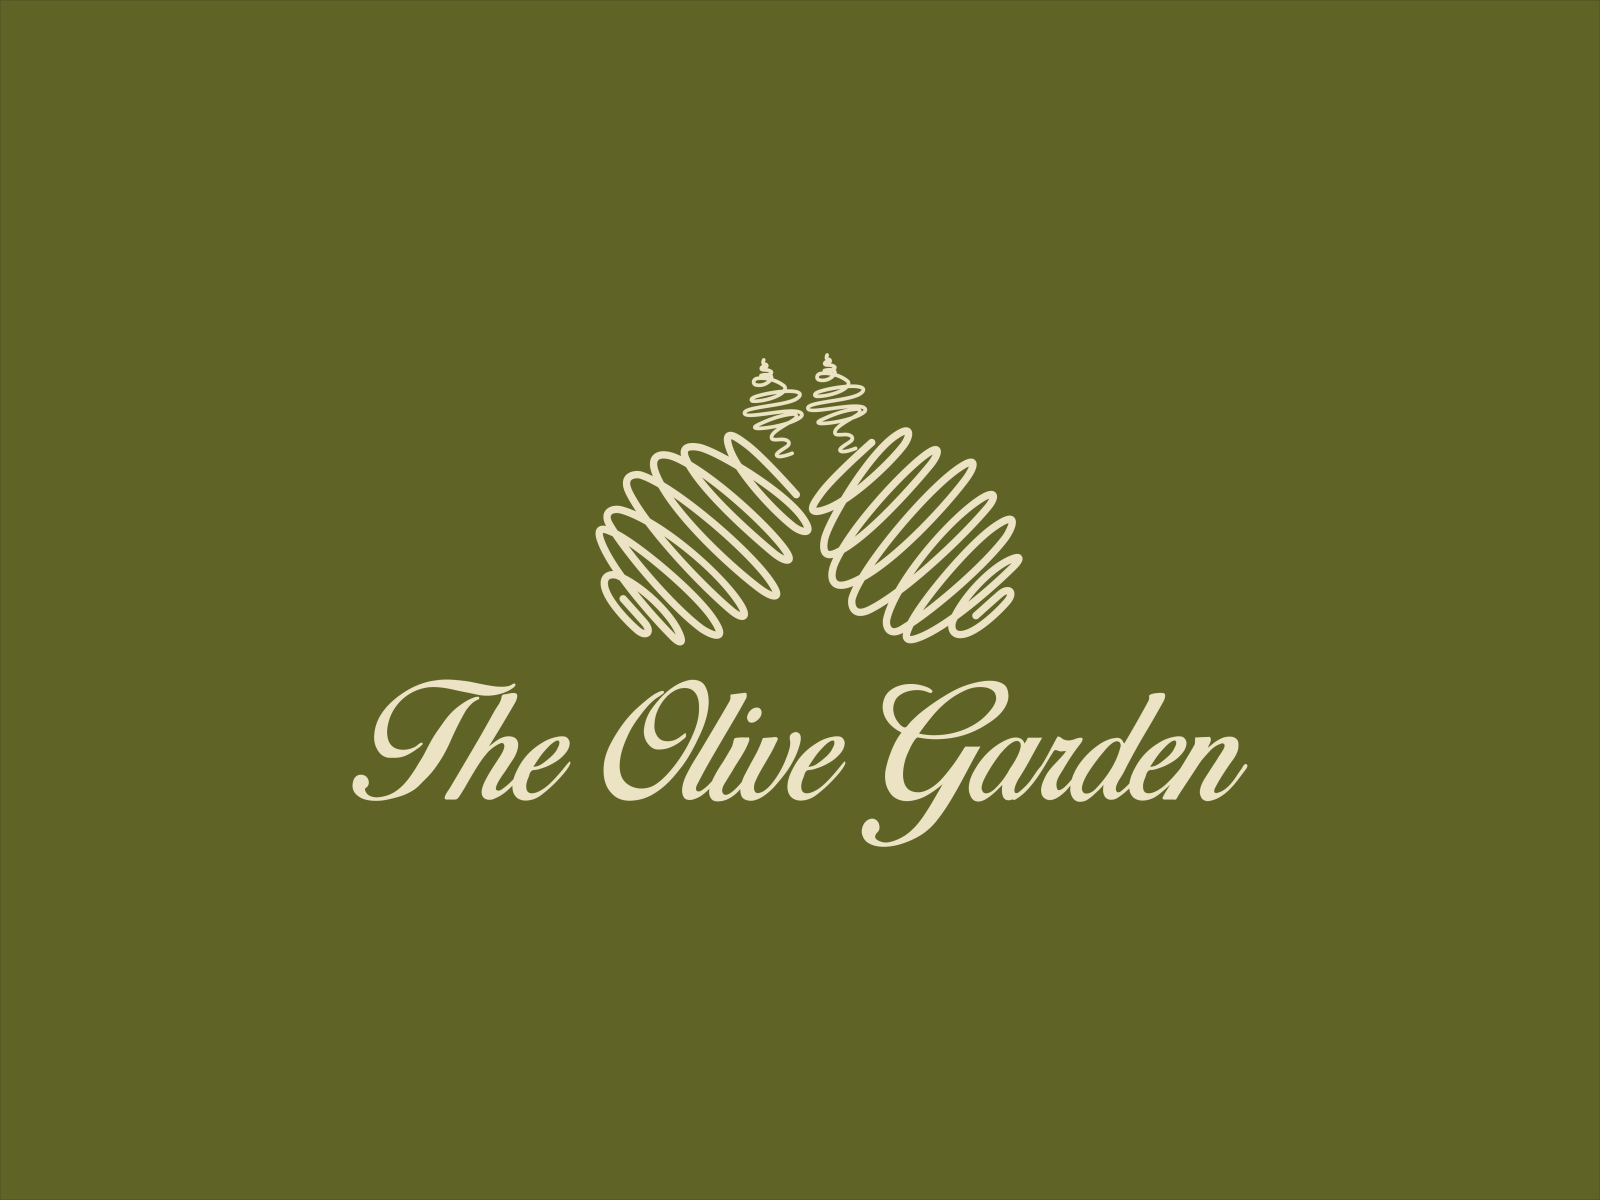 The Olive Garden Logo by Rufat Rzazada on Dribbble